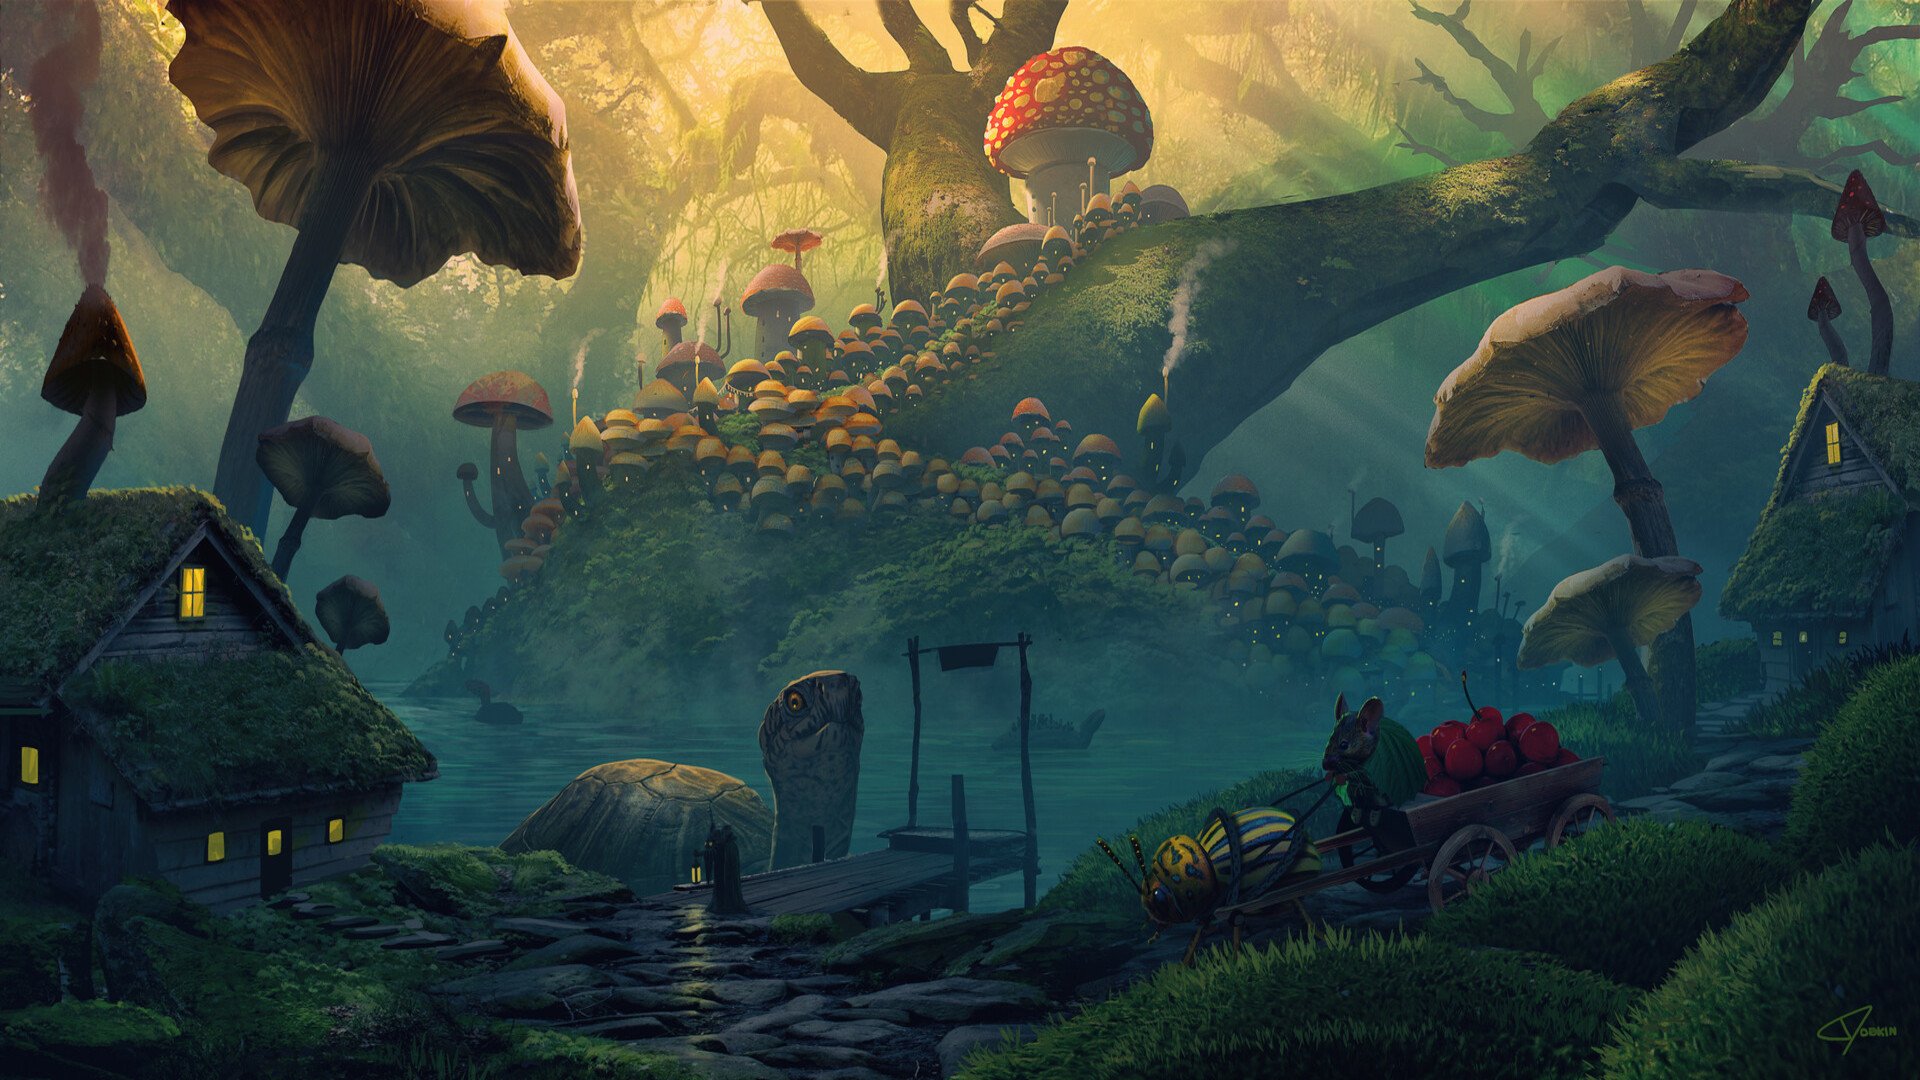 Mushroom Mouse Kingdom HD Wallpaper Background Image